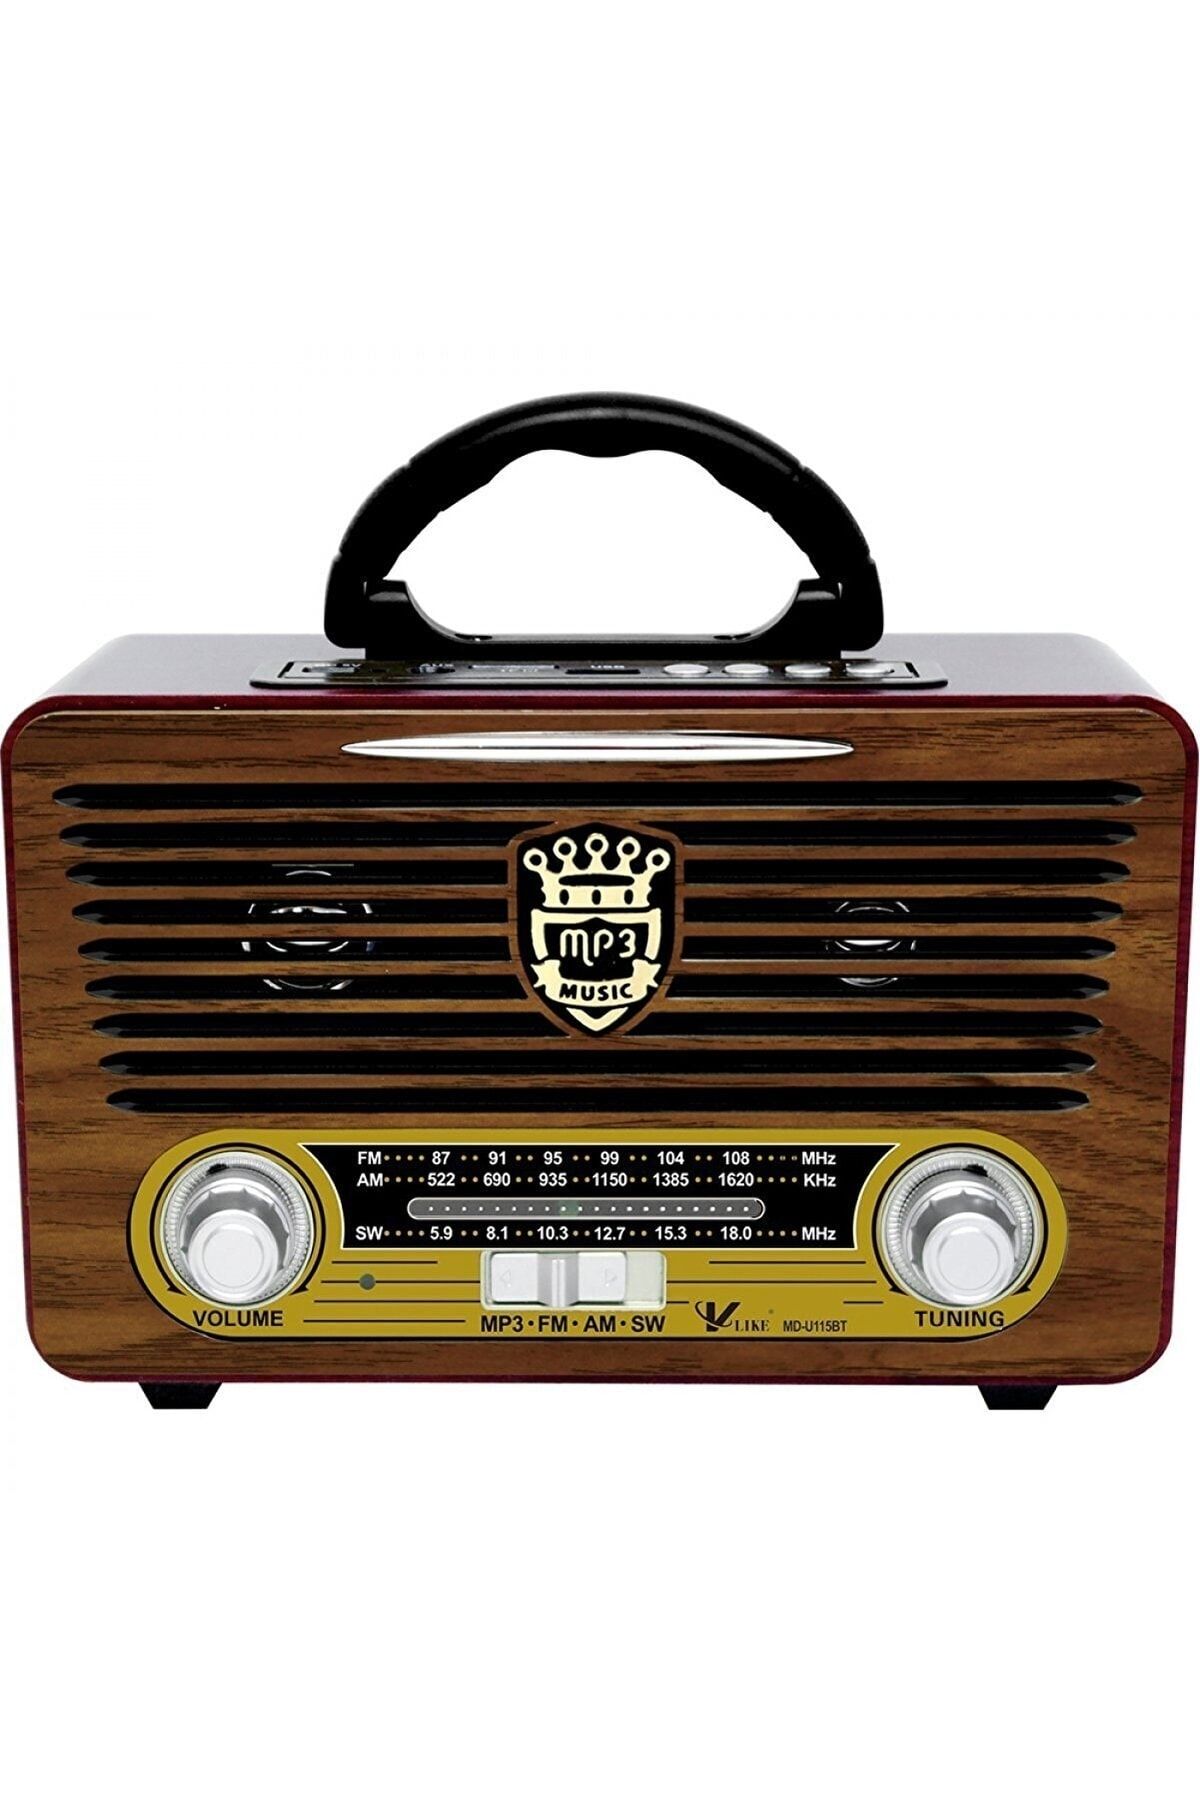 VOOKA A+ Kalite Nostalji Eskitme Bluetooth Hoparlör Fm Radio Sd Kart Usb Yüksek Ses Eski Nostalji 115bt